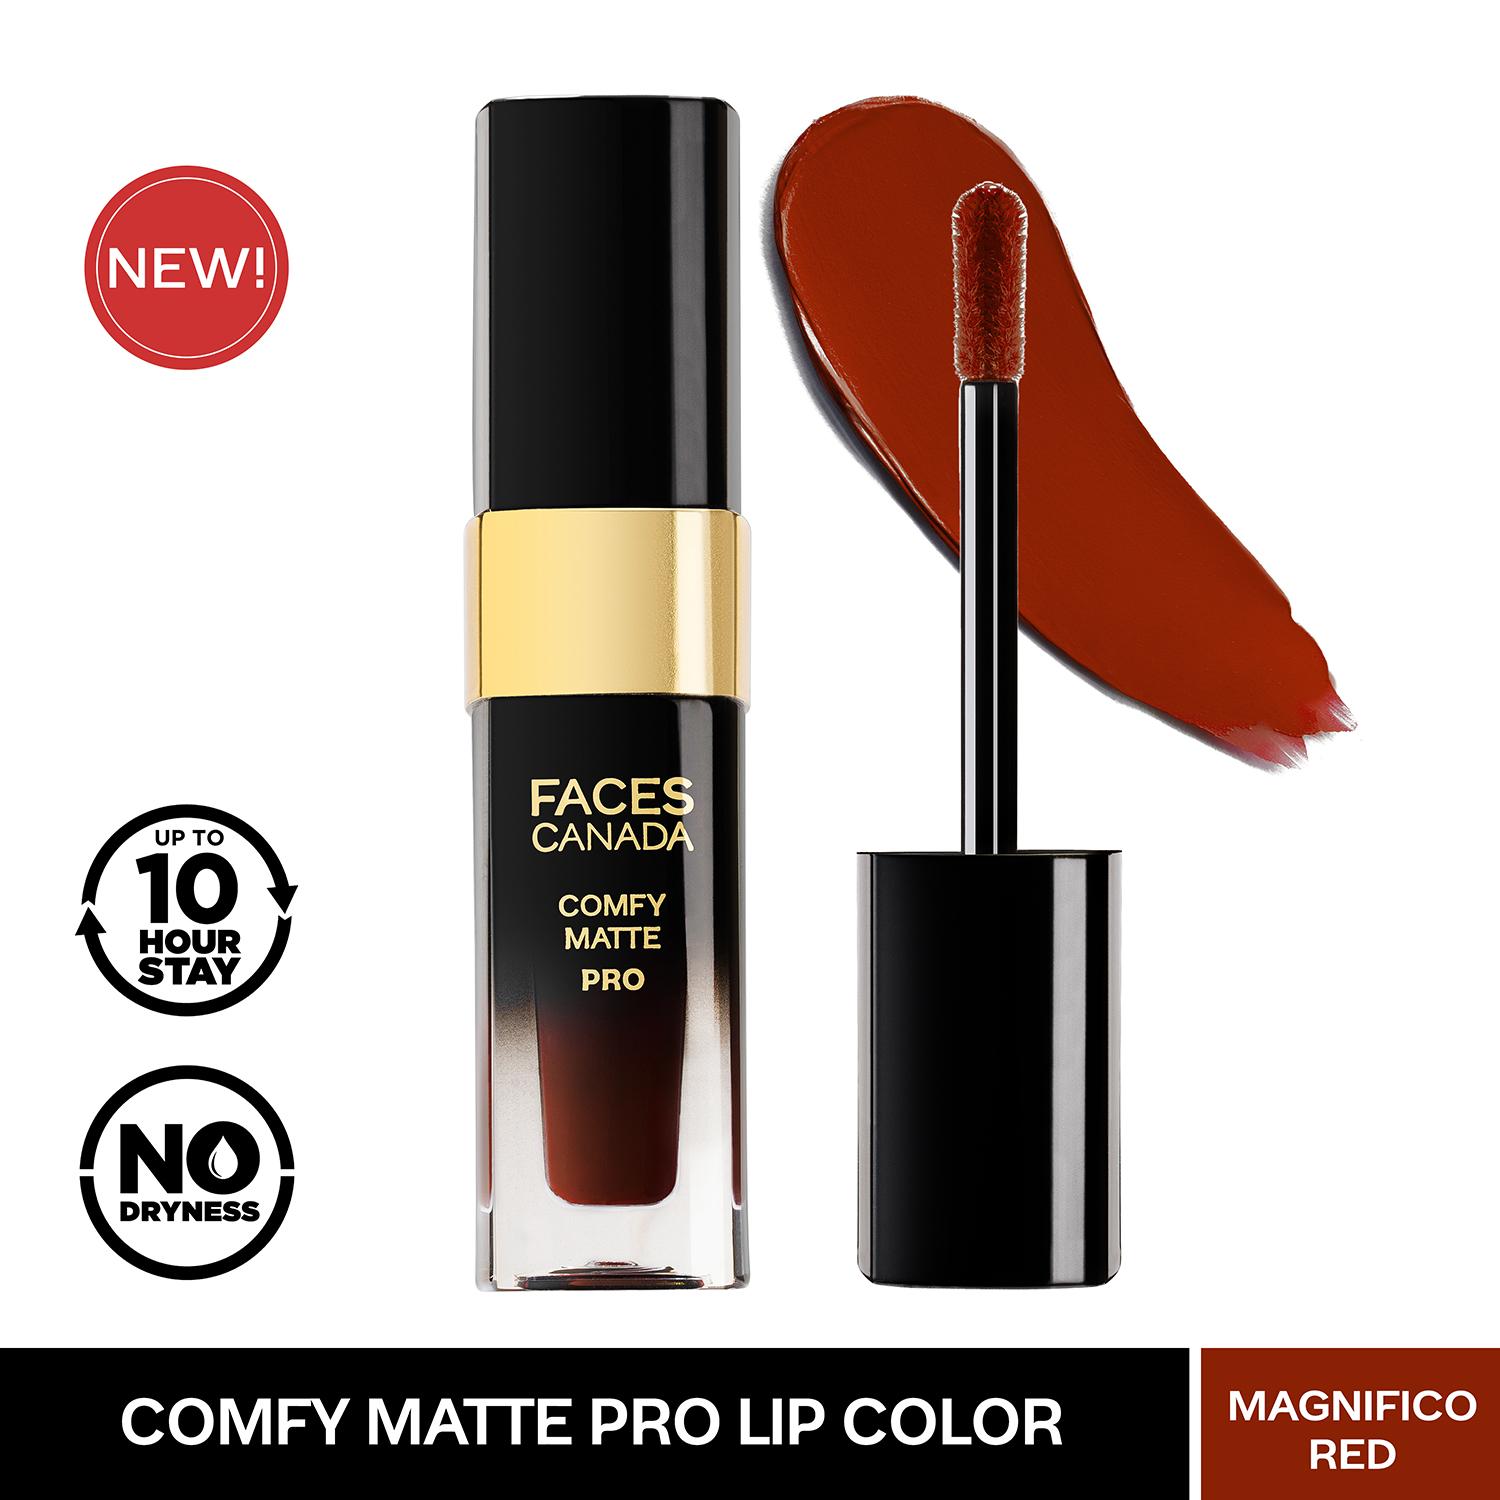 Faces Canada | Faces Canada Comfy Matte Pro Liquid Lipstick - Magnifico Red 01, 10HR Stay, No Dryness (5.5 ml)